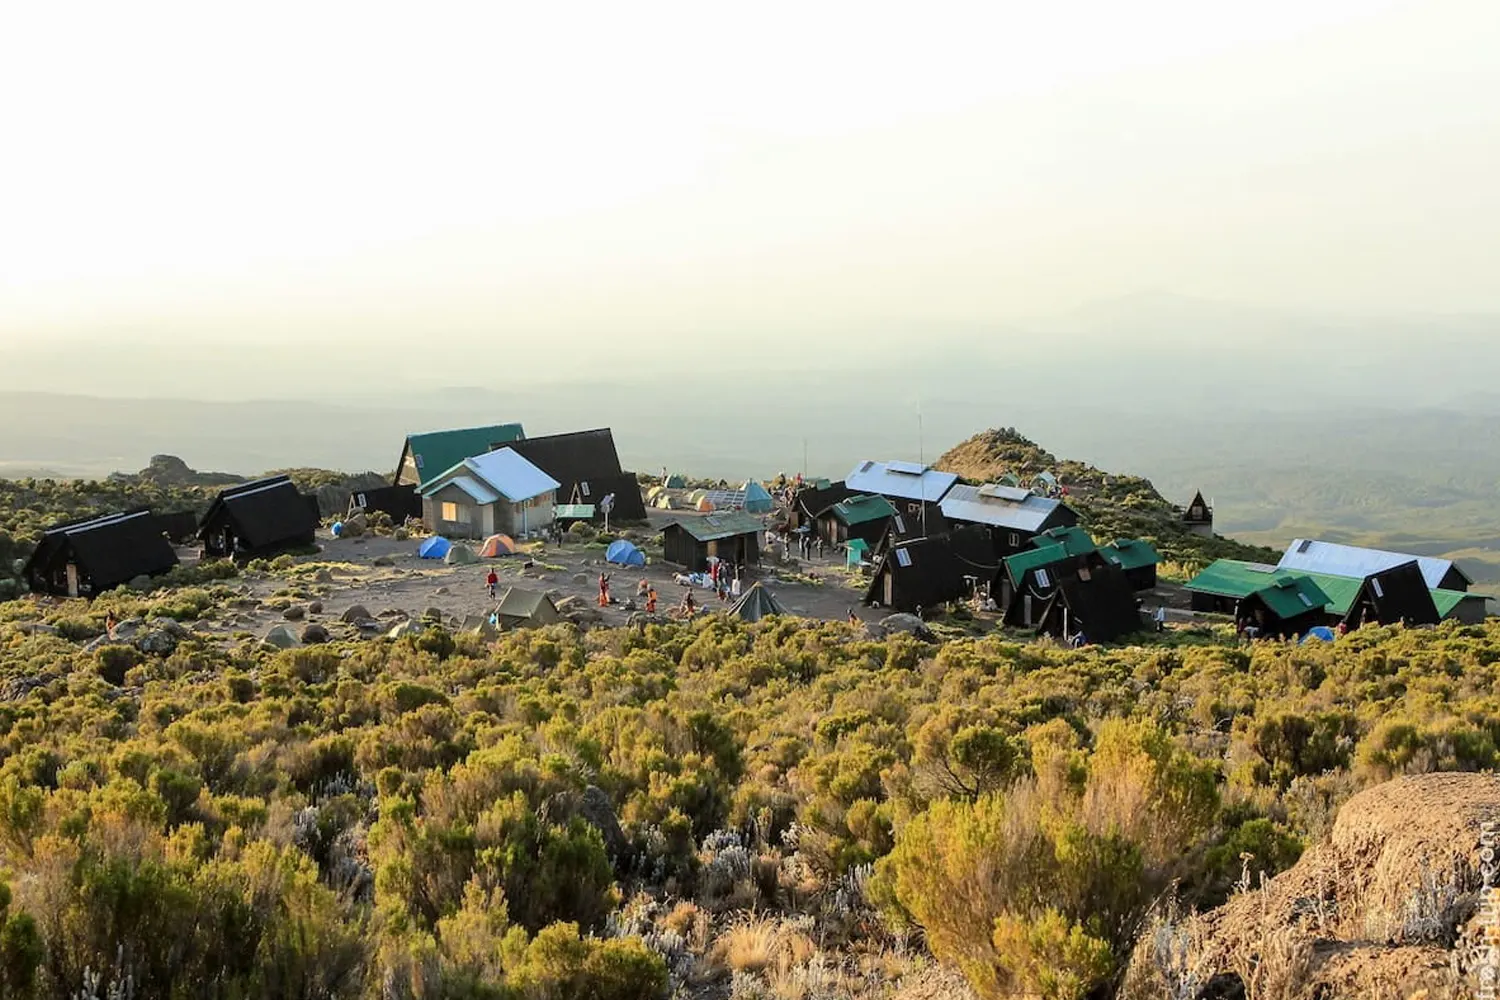 Kilimanjaro Climbing and Trekking Tour Packages